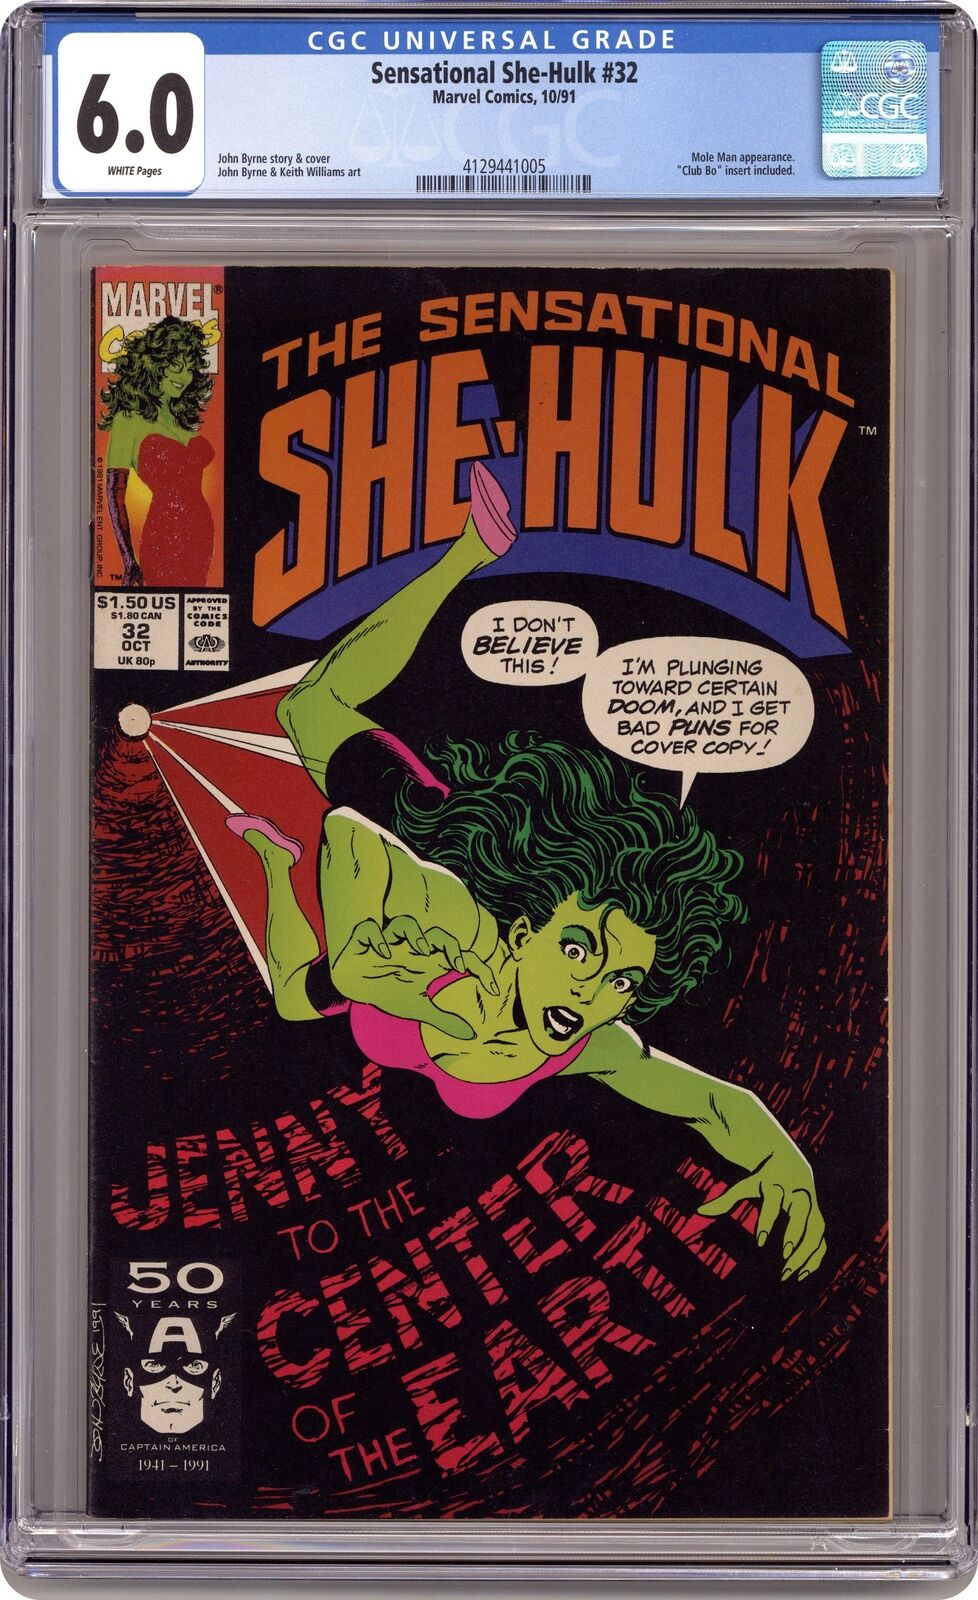 Sensational She-Hulk #32 CGC 6.0 1991 4129441005